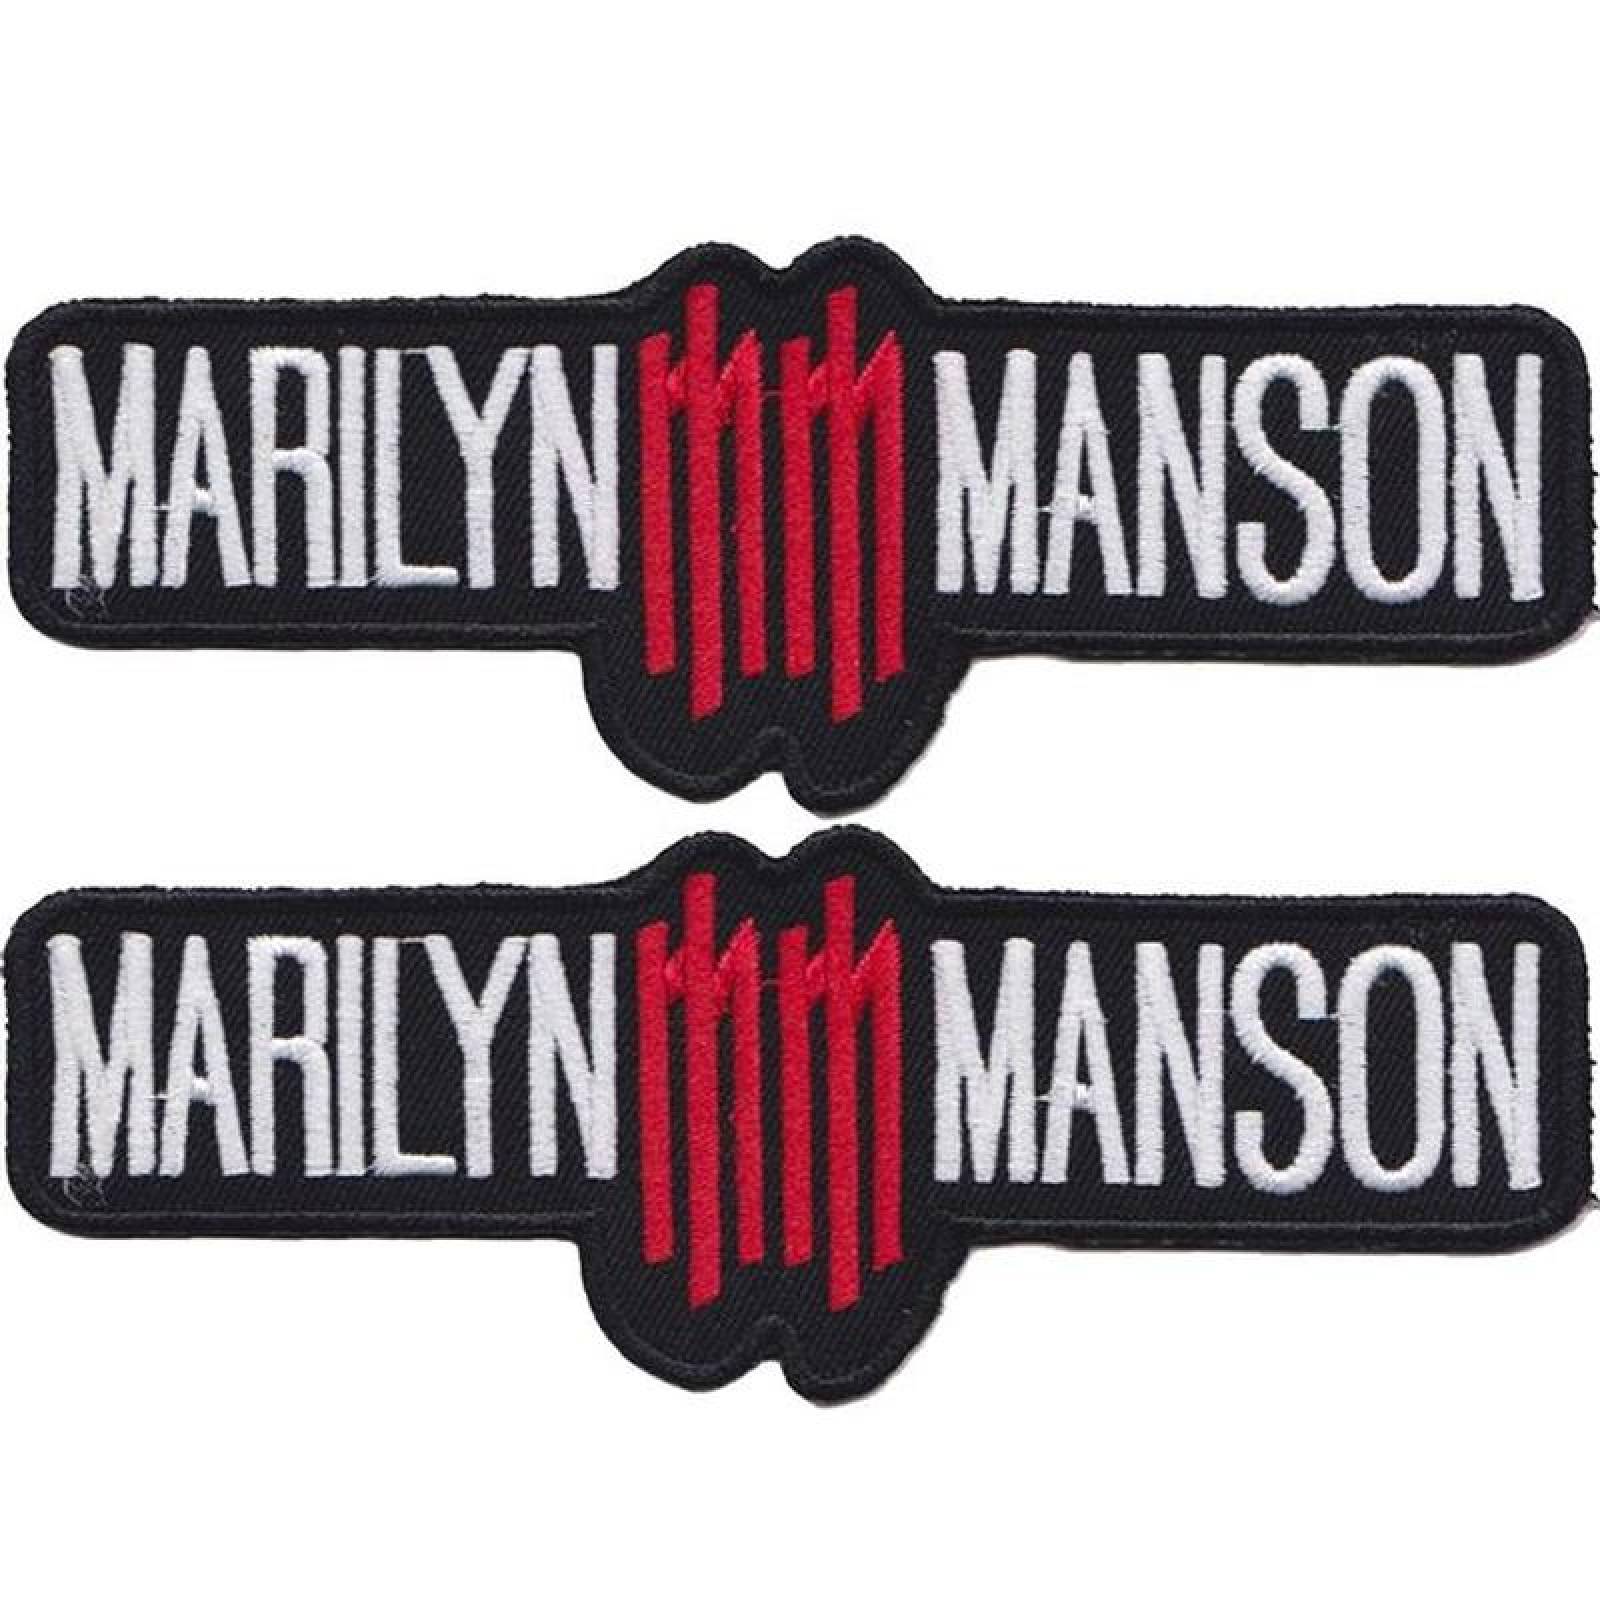 Pegatinas Adhesivas para Ropa MXPKA-004-4 4 Parches Marilyn Manson 16x6cm  NegroBlanco Bordado Adhesivo para